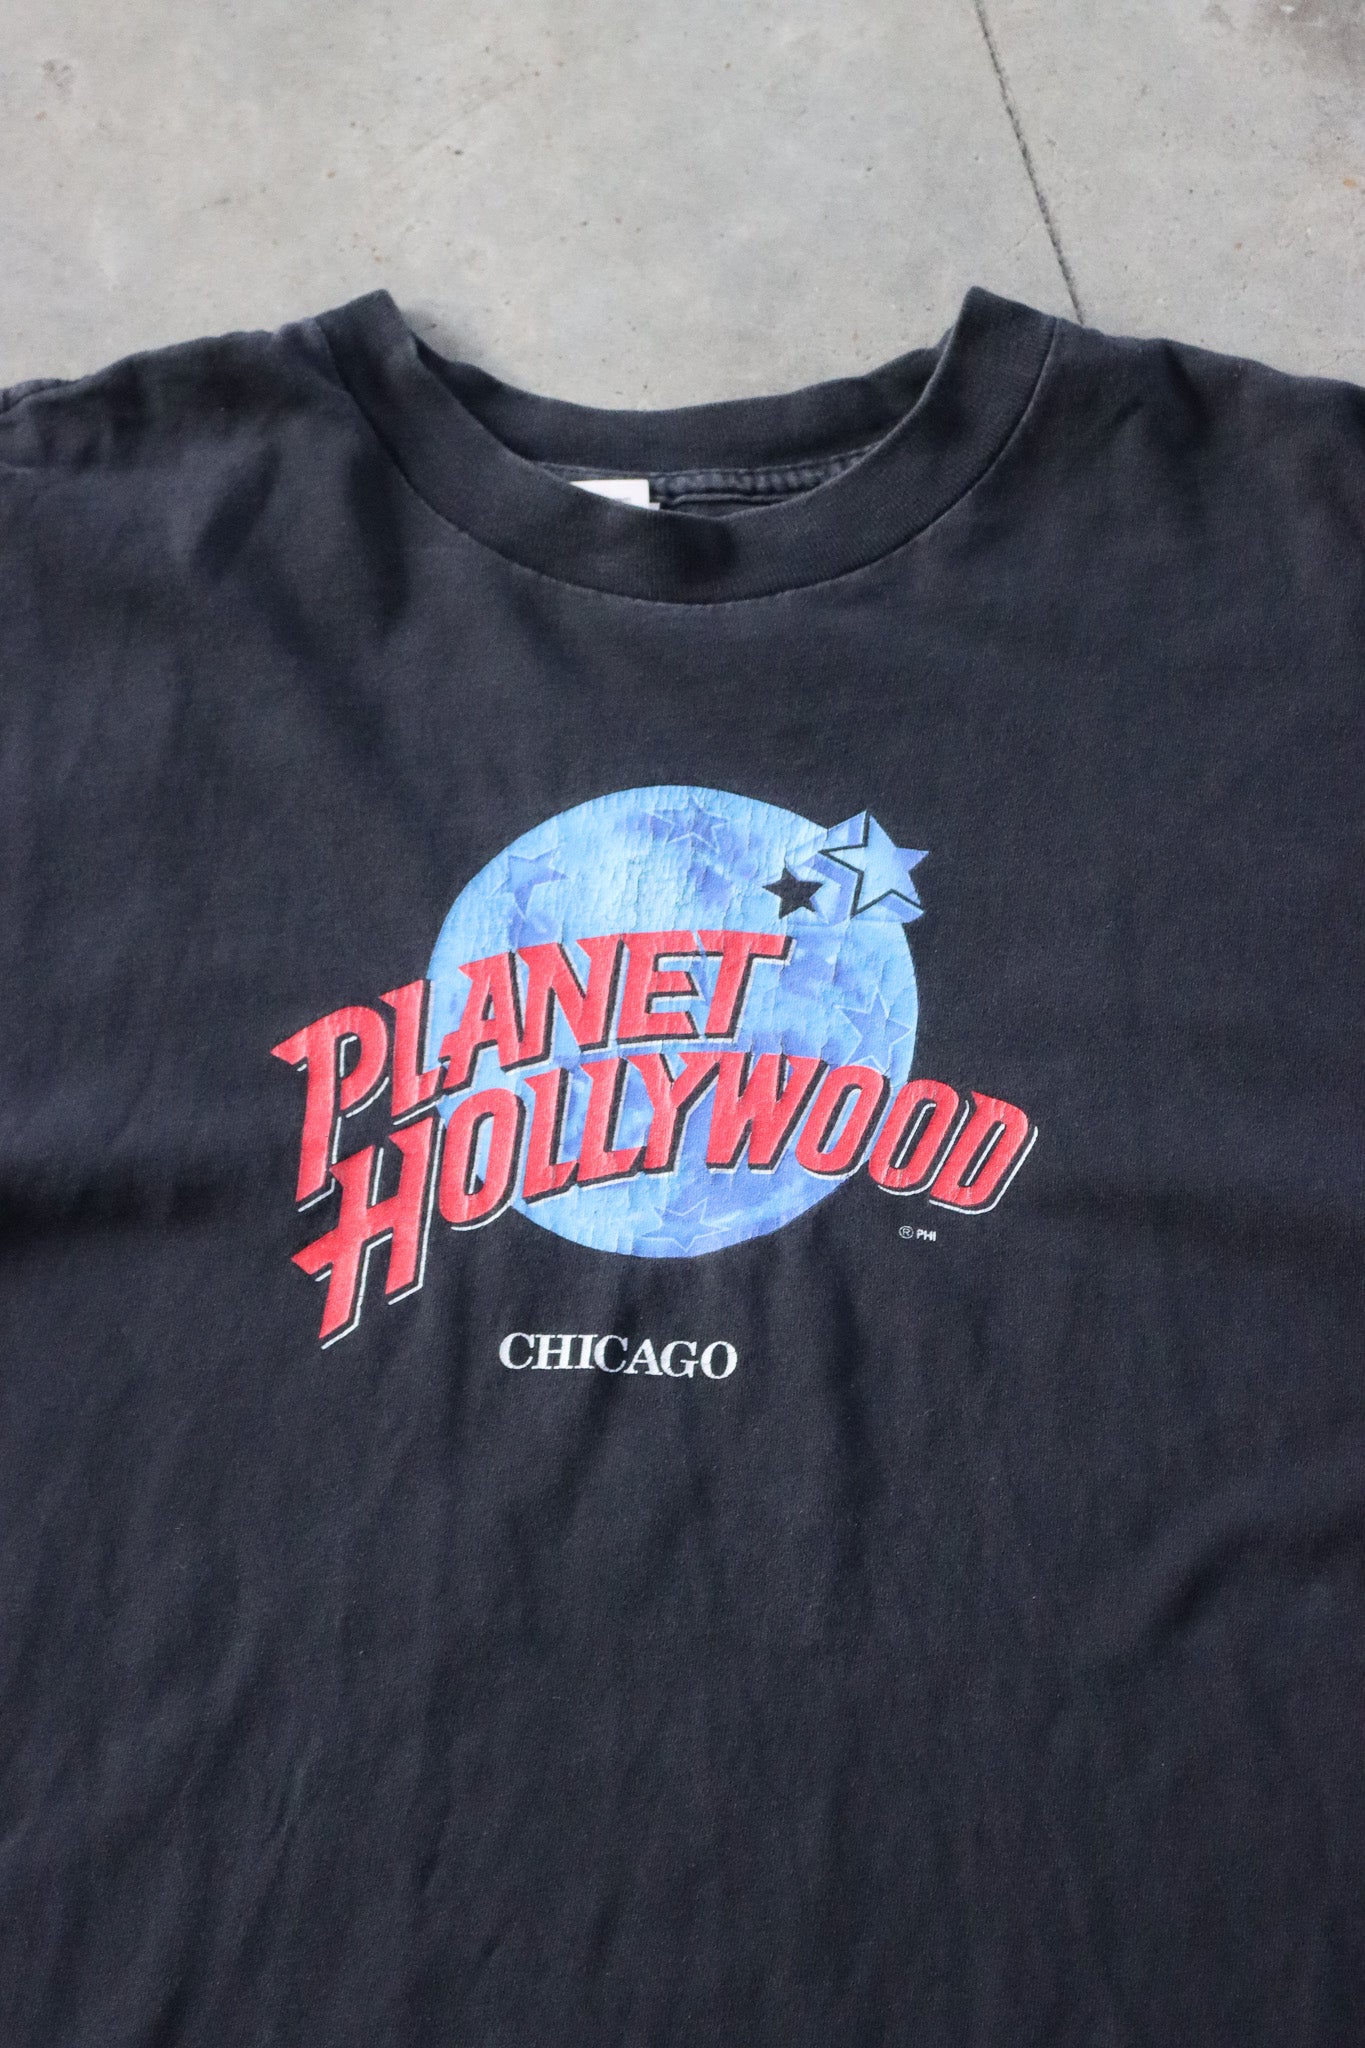 Vintage Planet Hollywood Tee XL